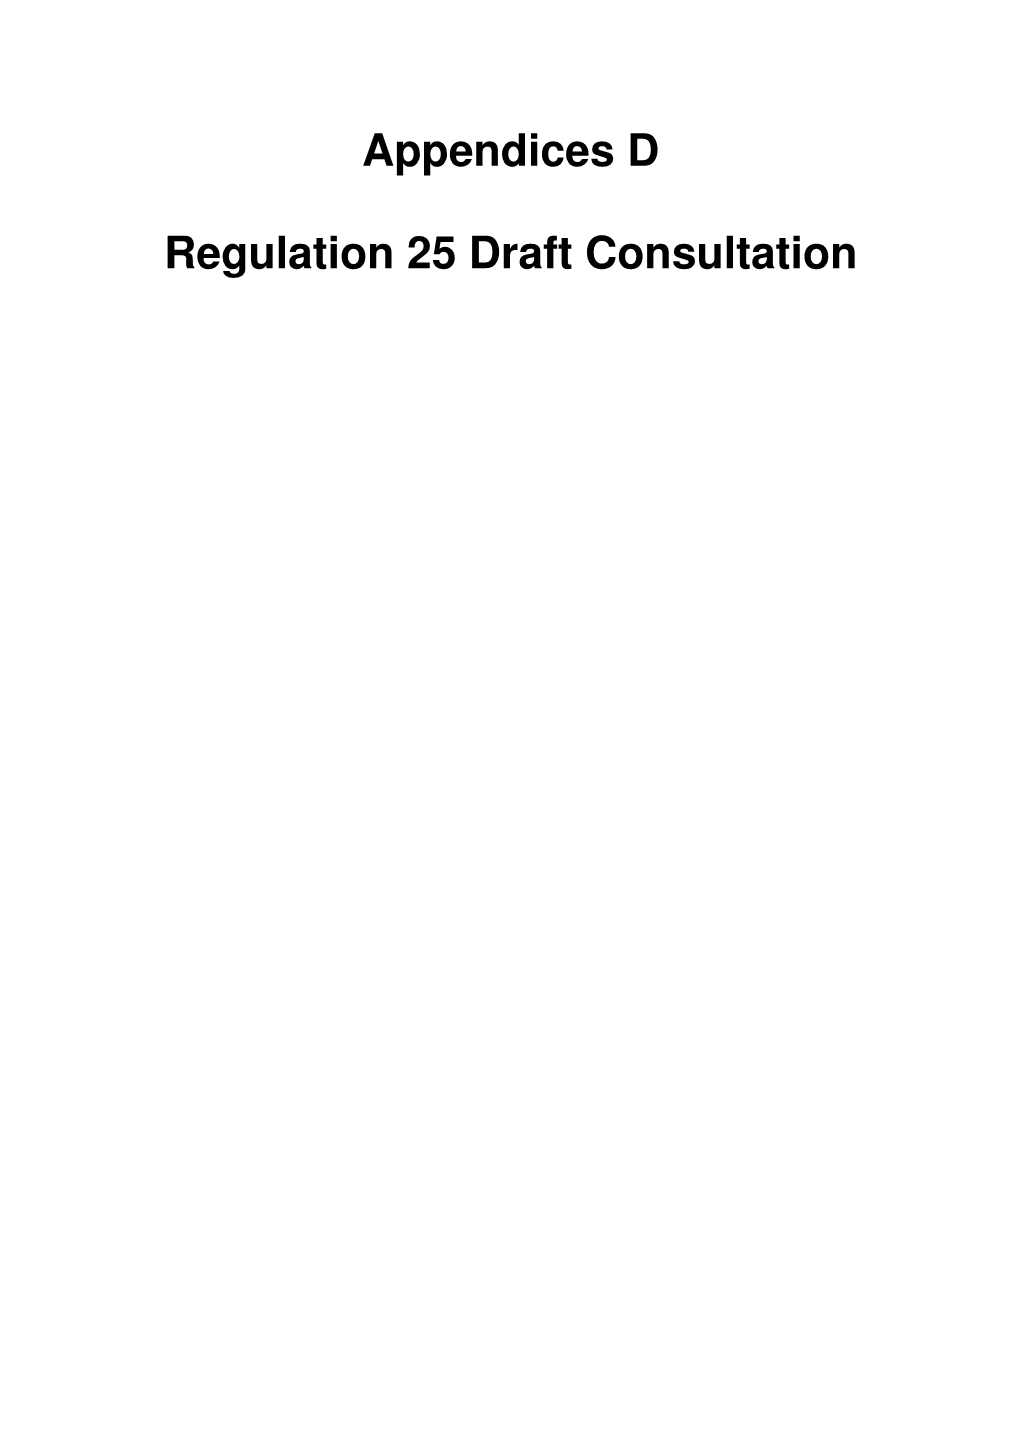 Appendices D Regulation 25 Draft Consultation